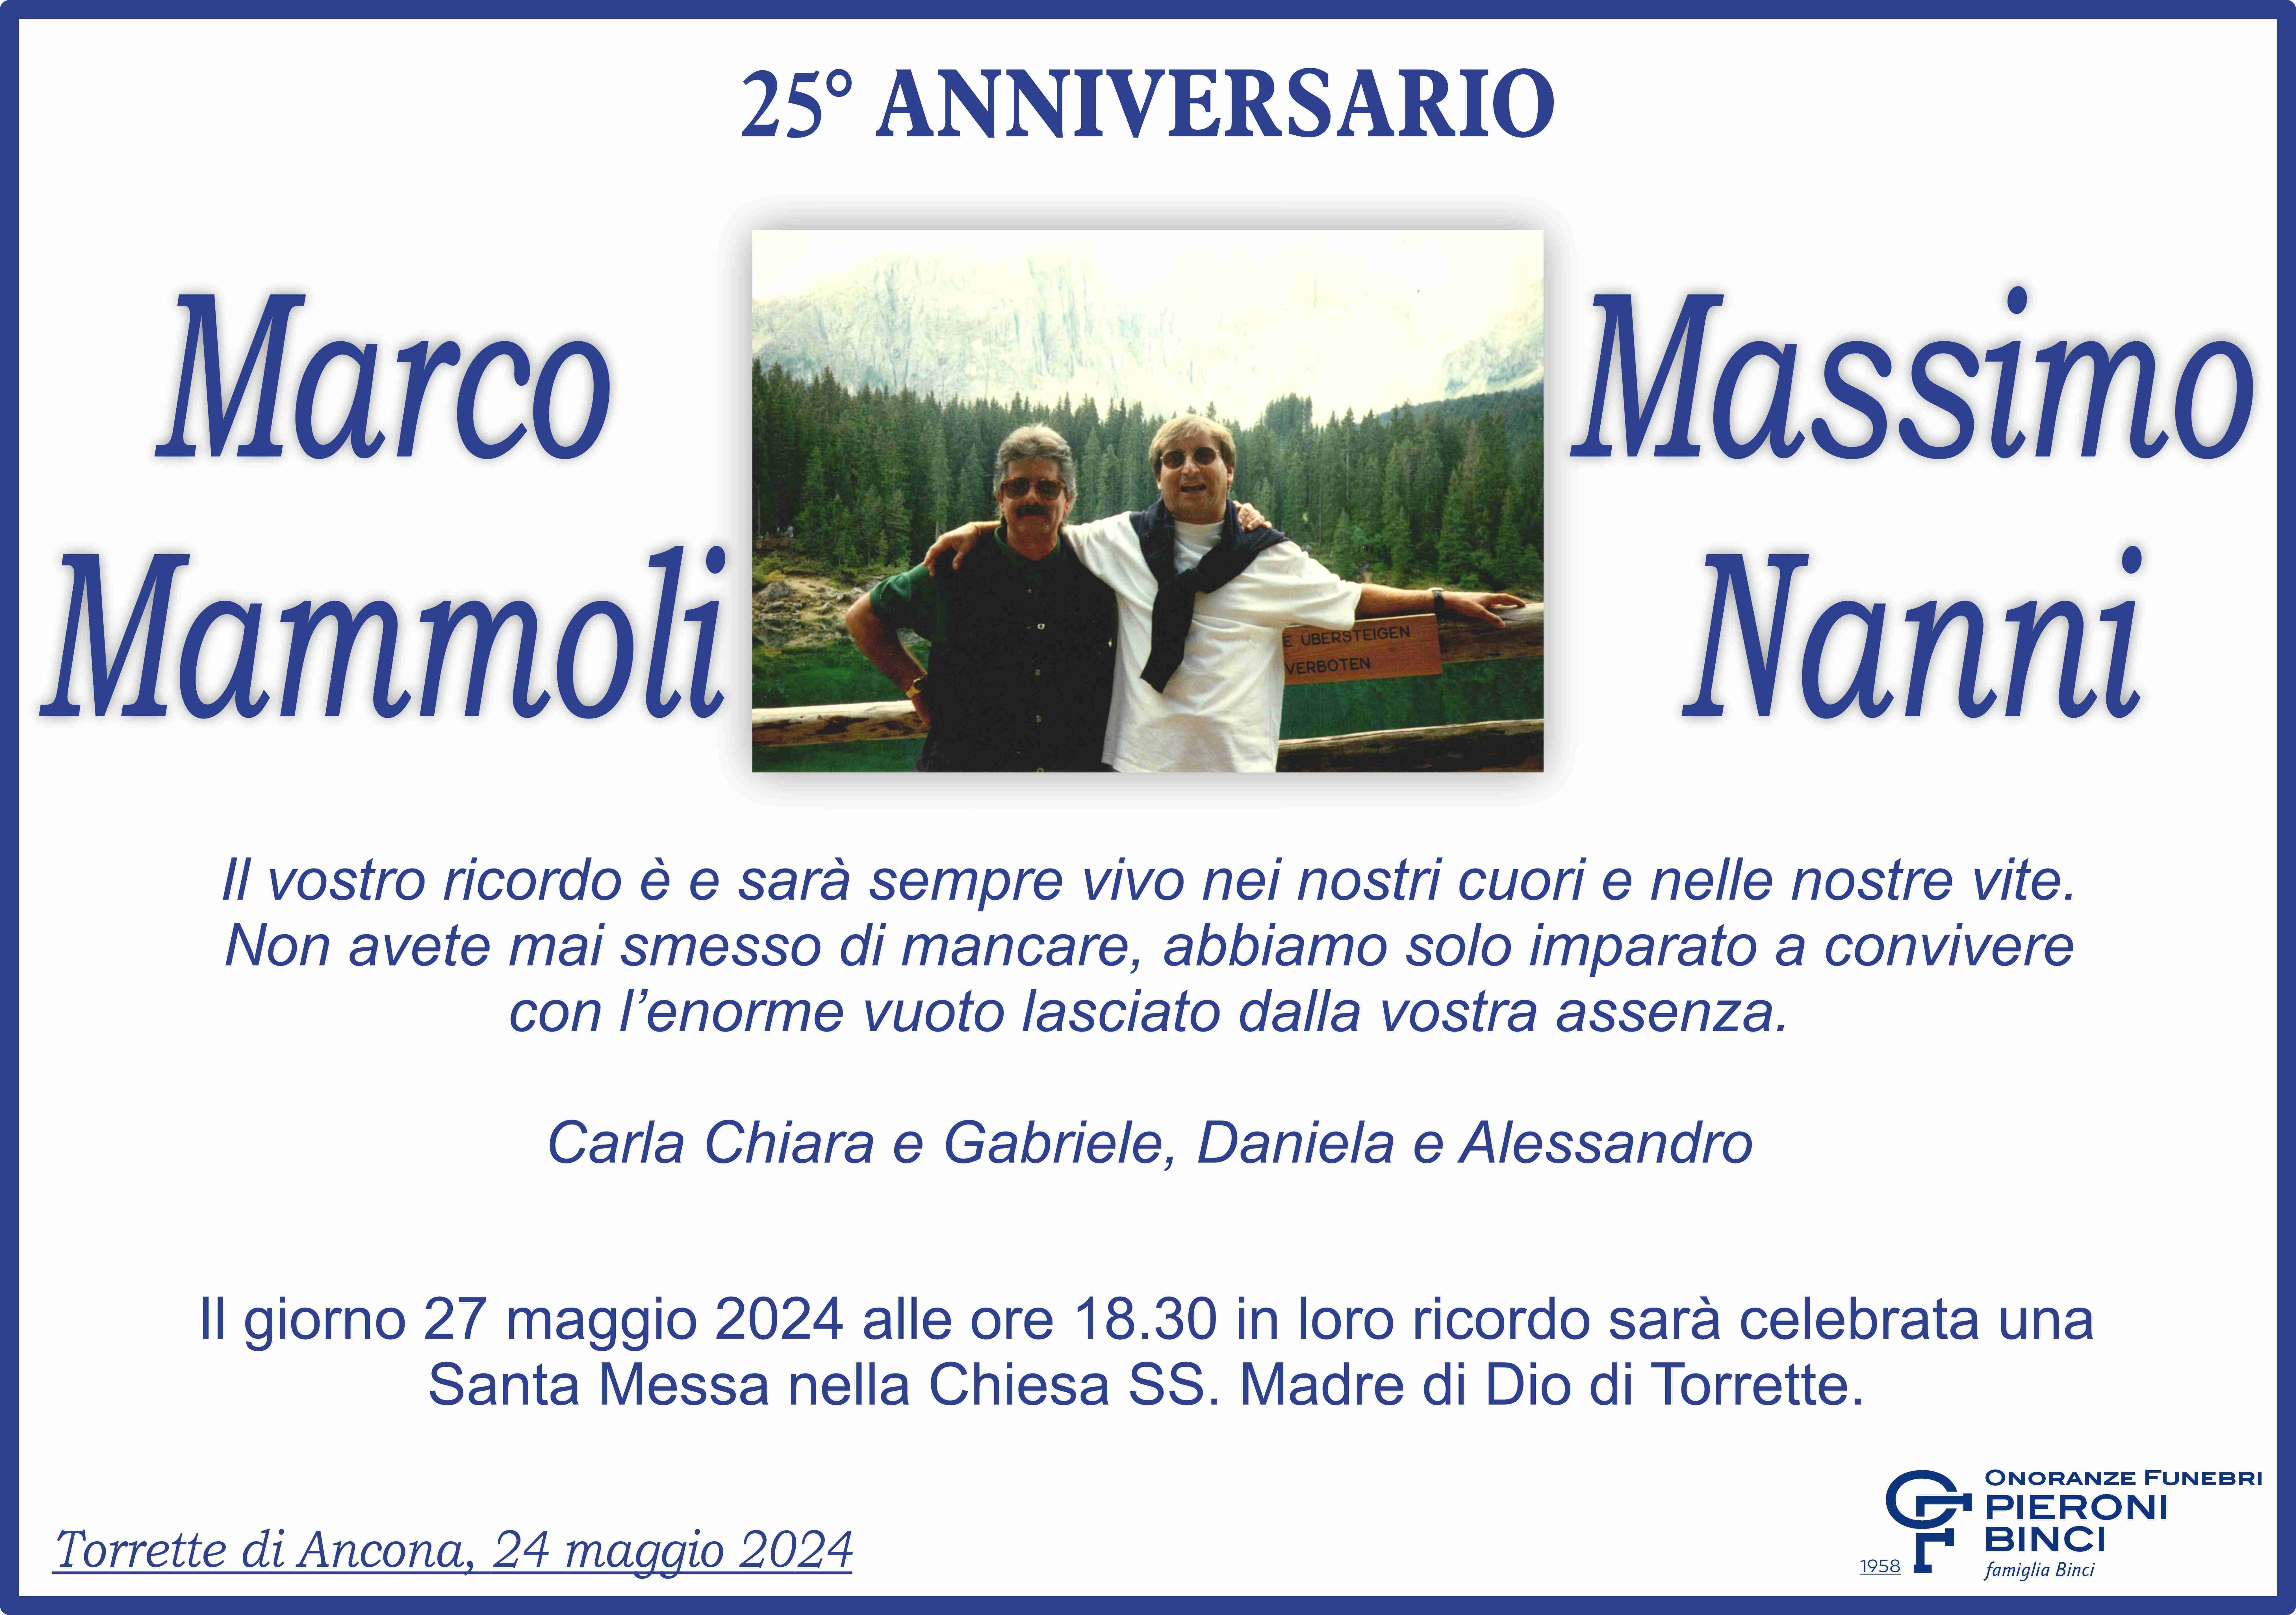 Marco Mammoli Massimo Nanni